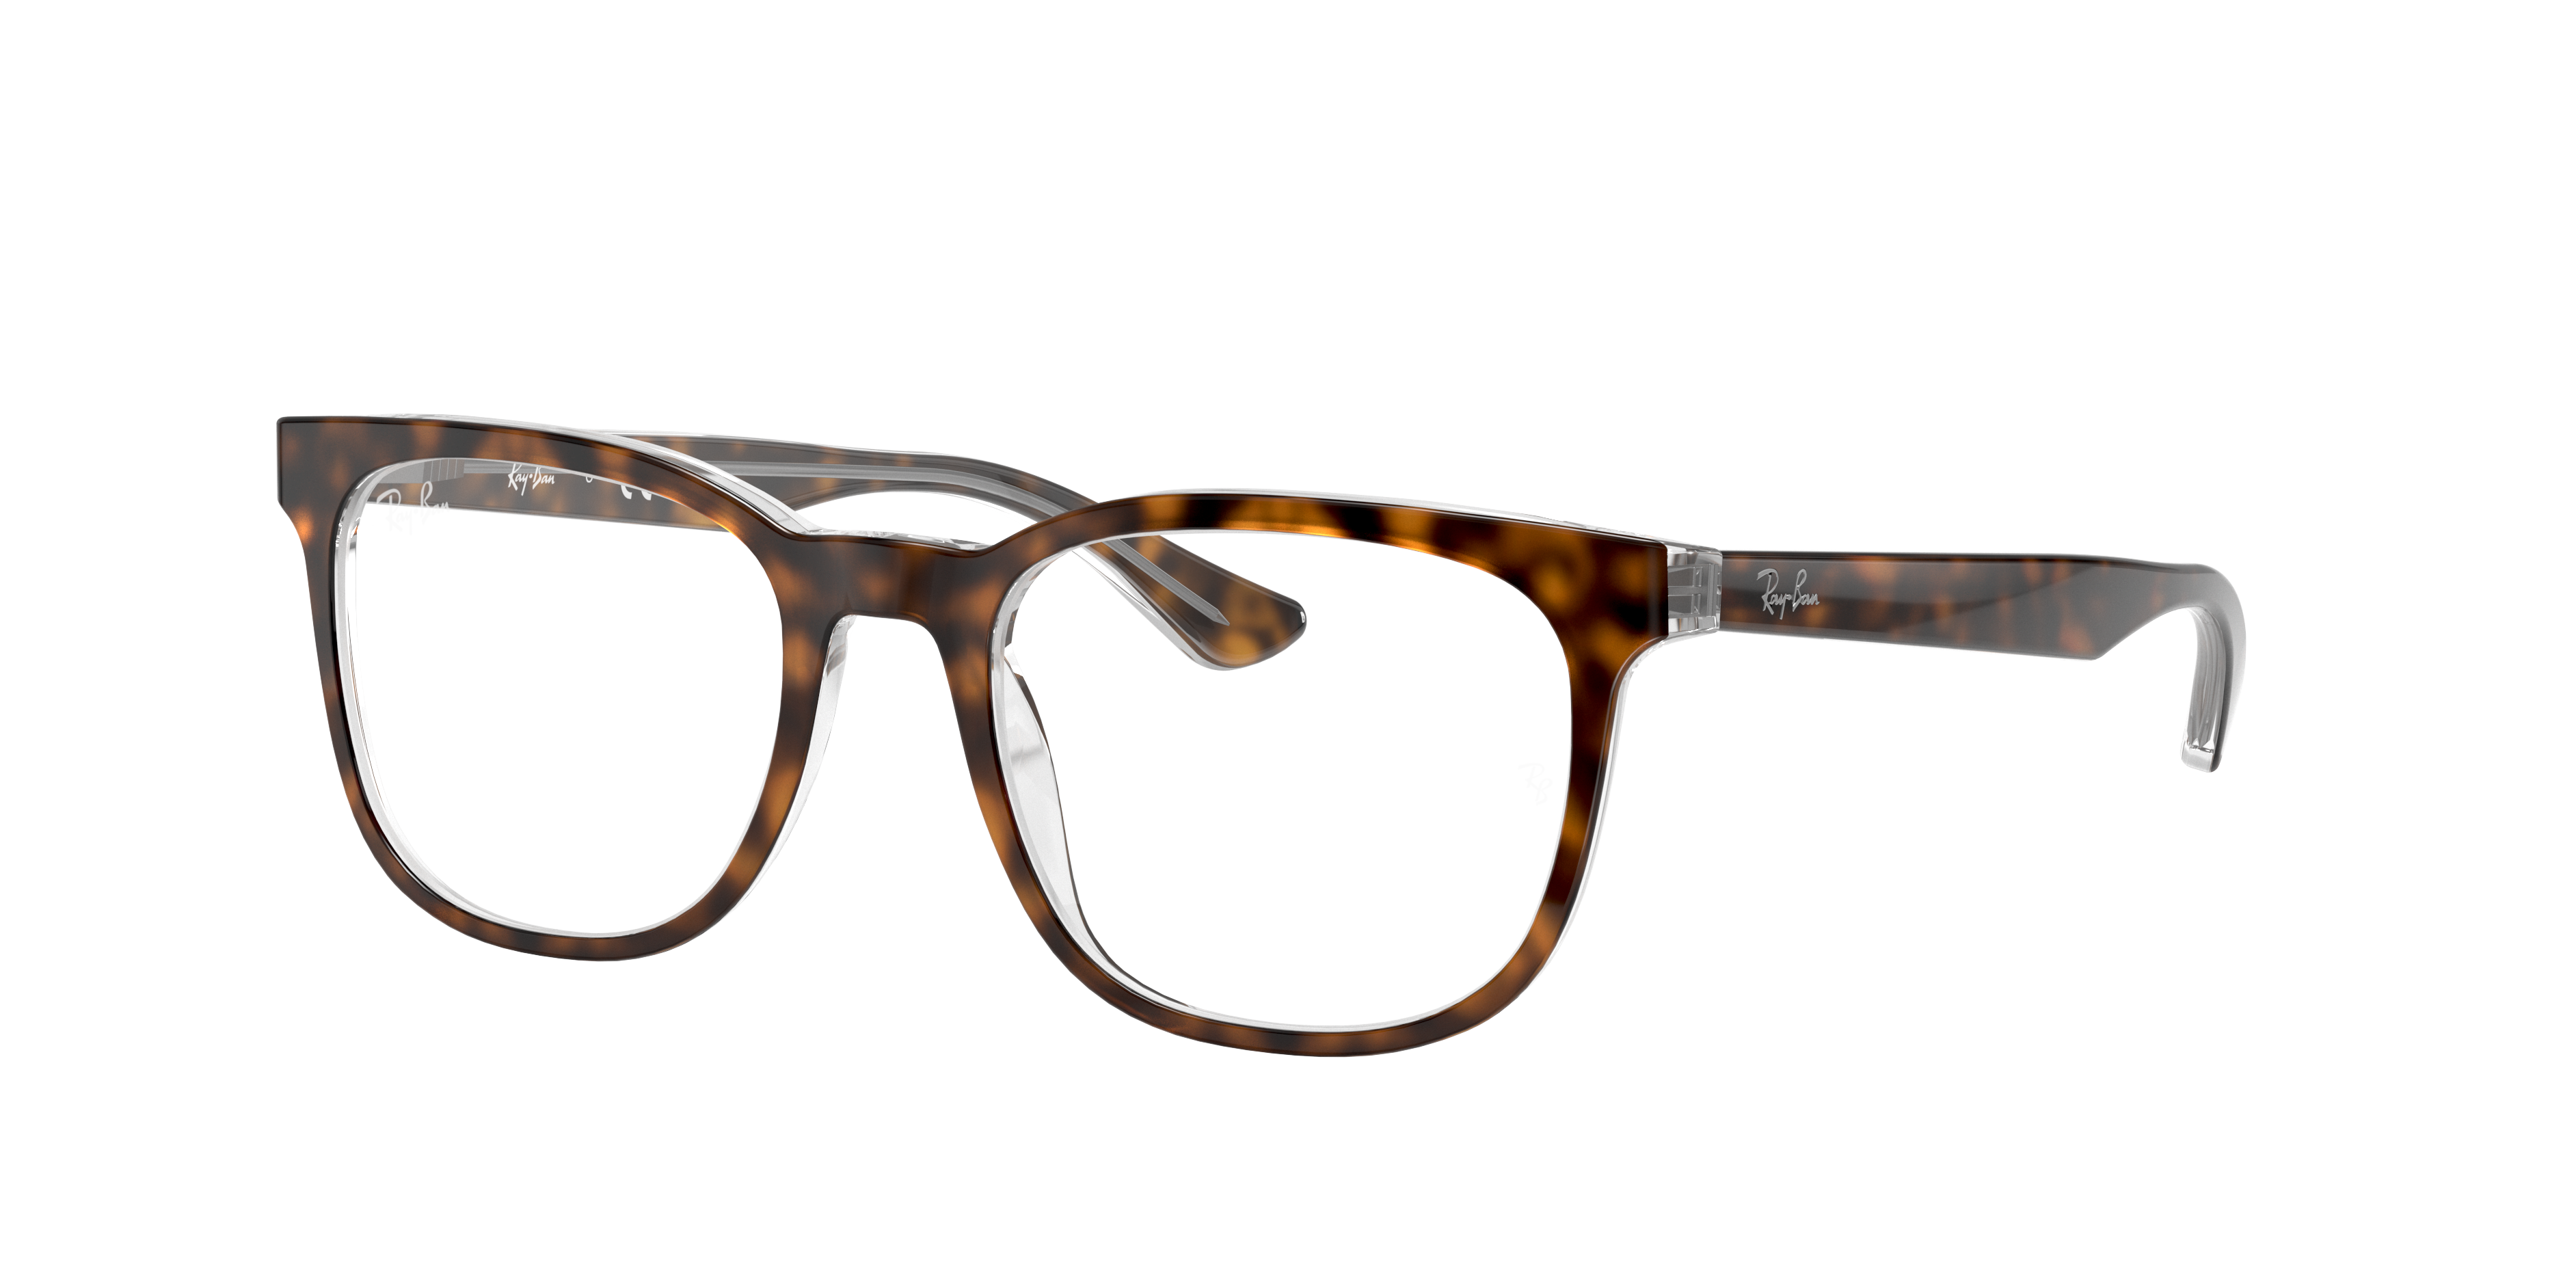 stad Conserveermiddel Converteren Rb5369 Optics Eyeglasses with Havana On Transparent Frame | Ray-Ban®